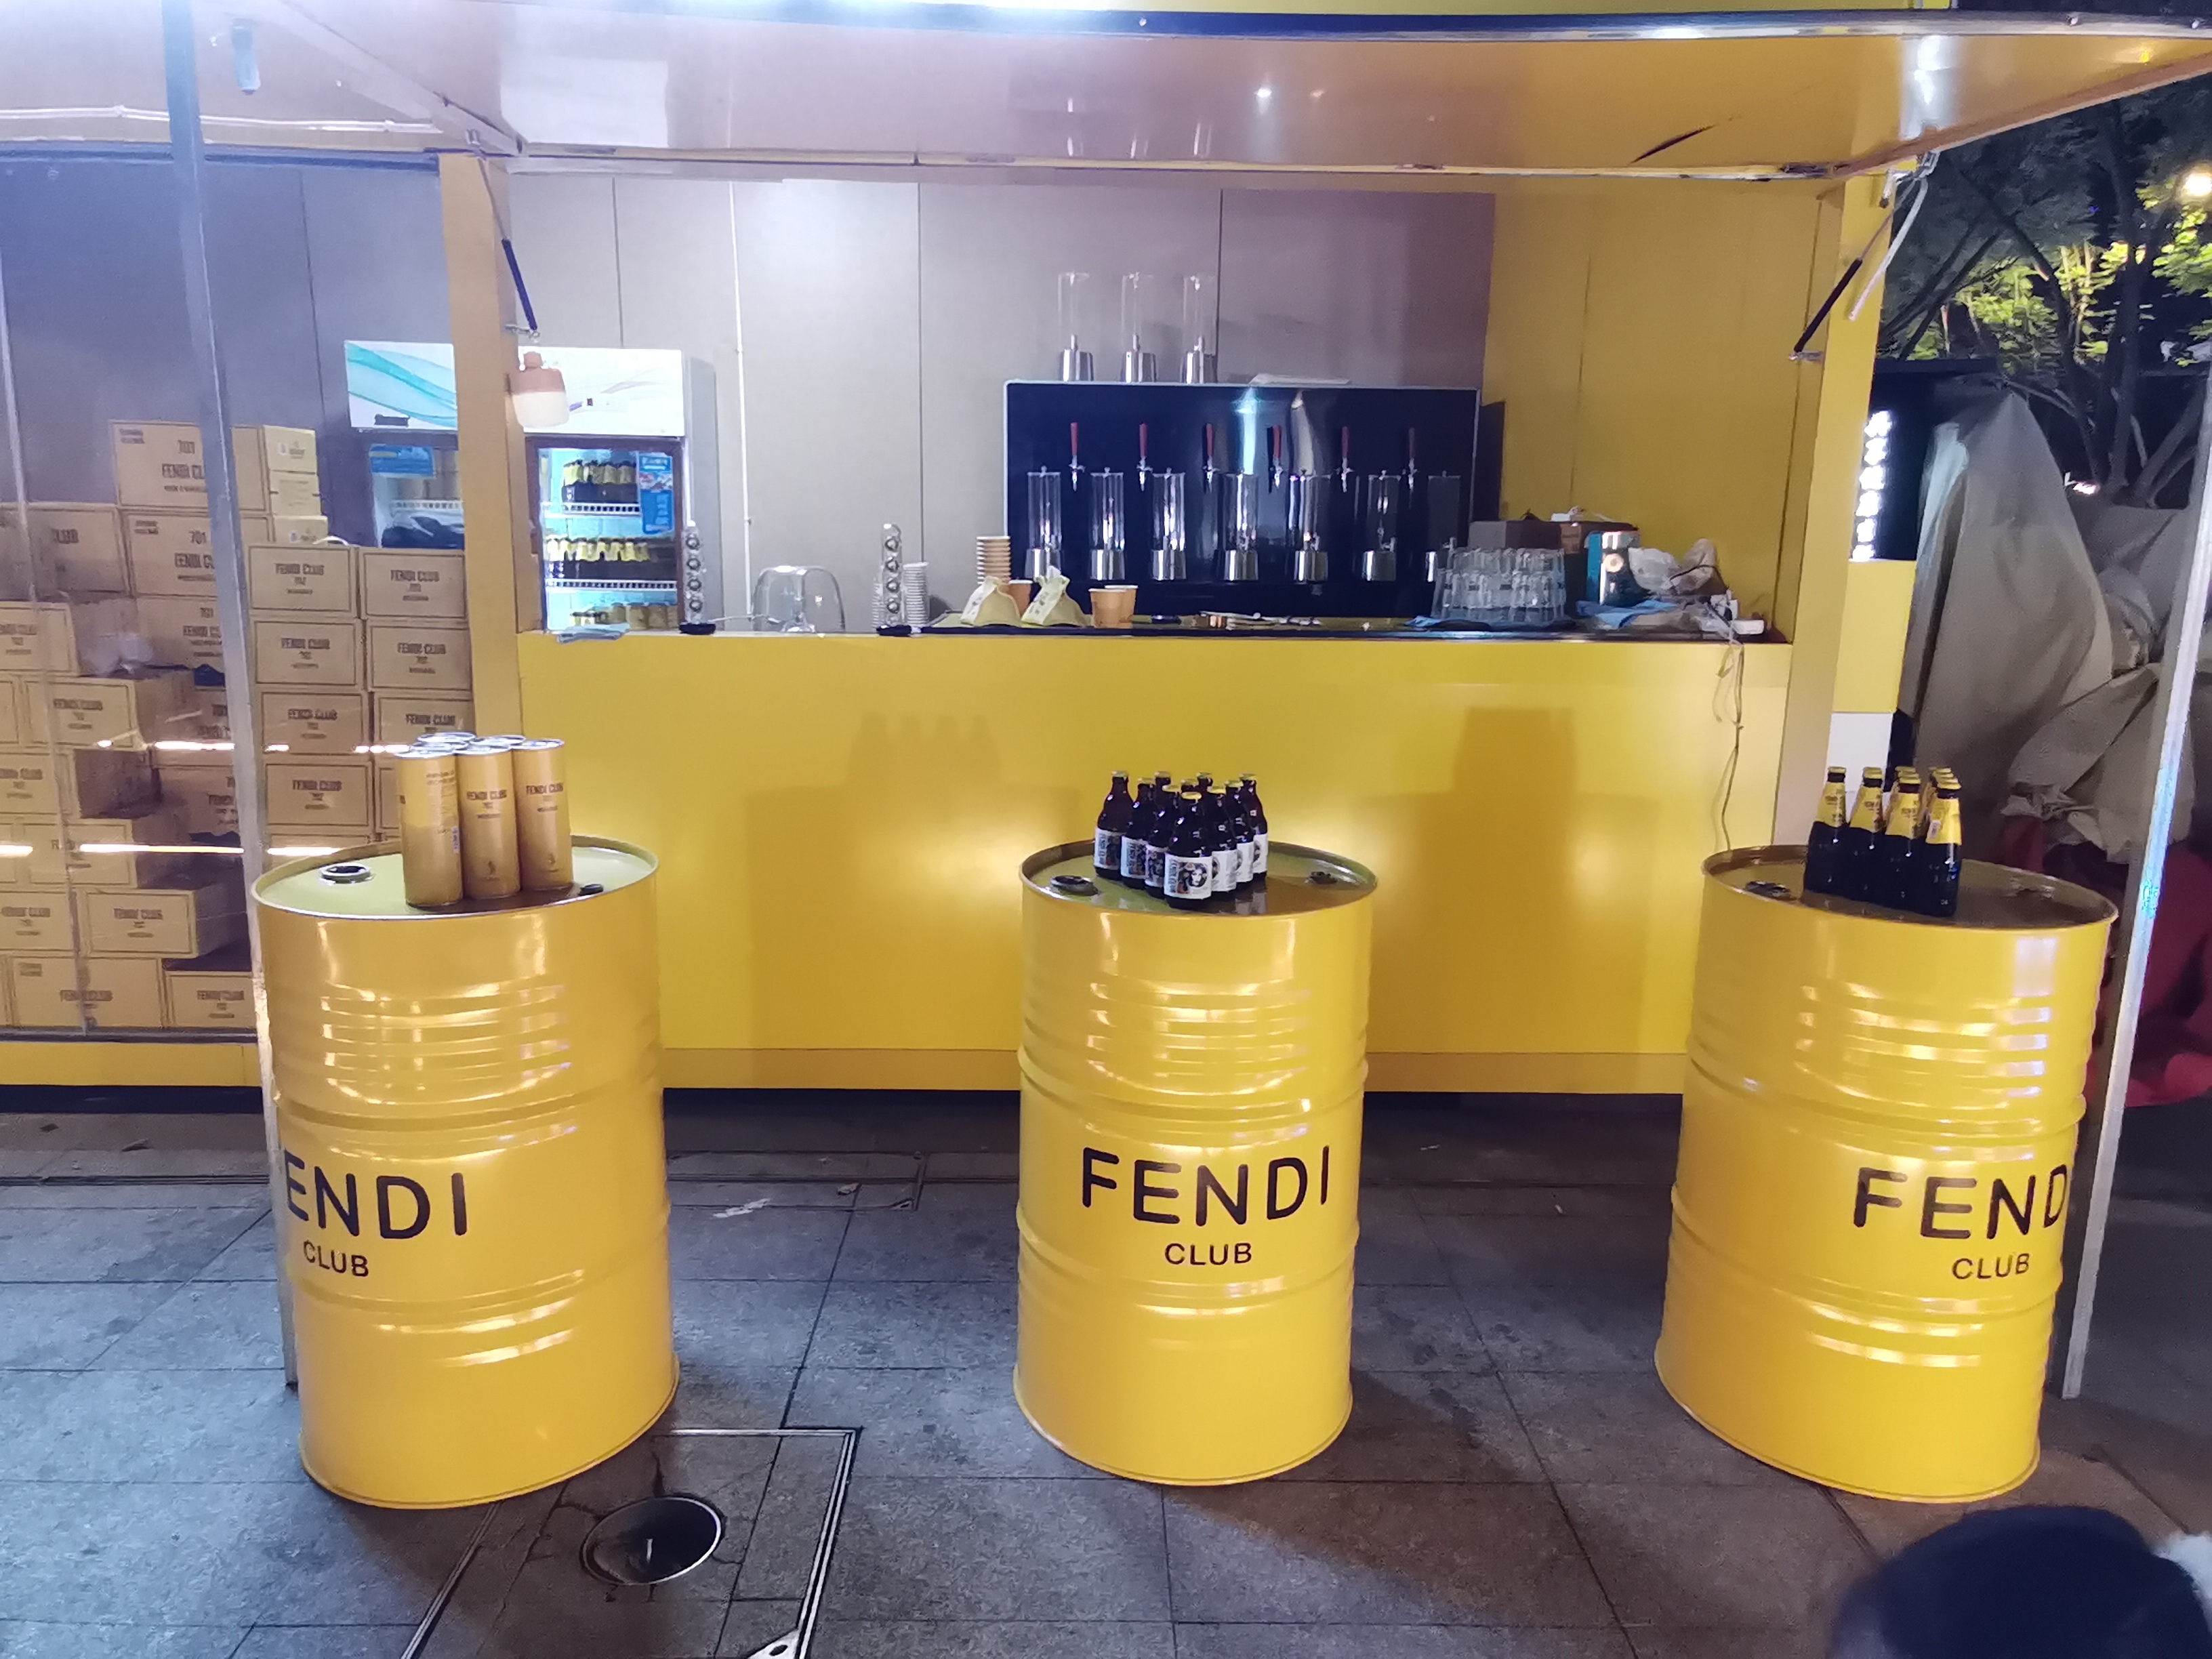 FENDI CLUB 啤酒是奢侈品吗？为什么口感好却又不贵？